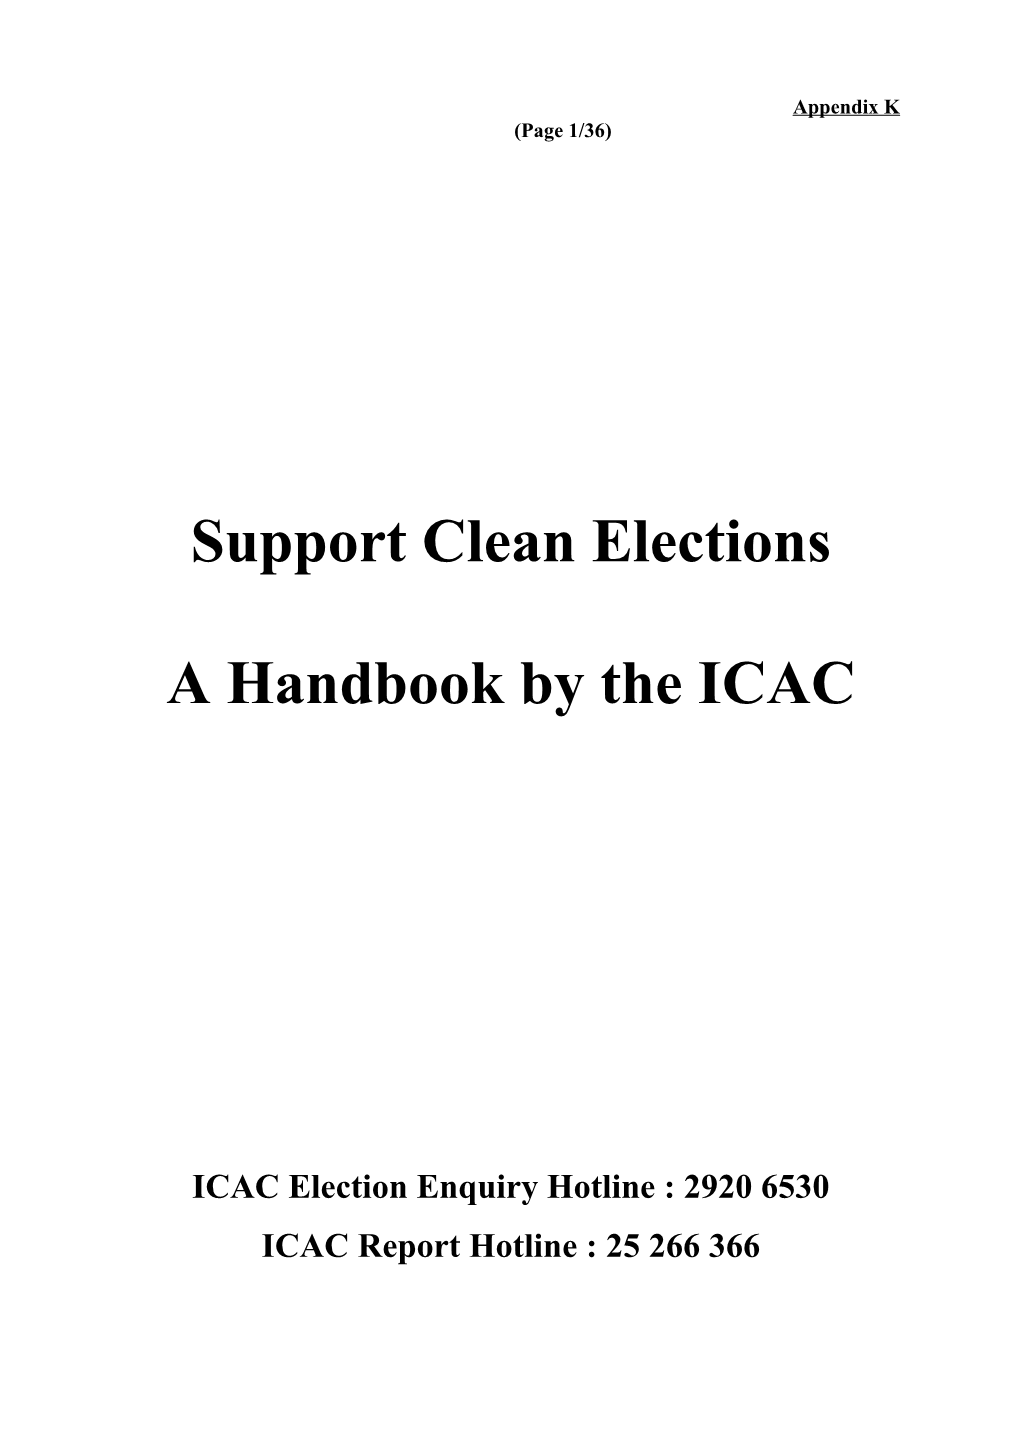 ICAC Election Enquiry Hotline : 2920 6530